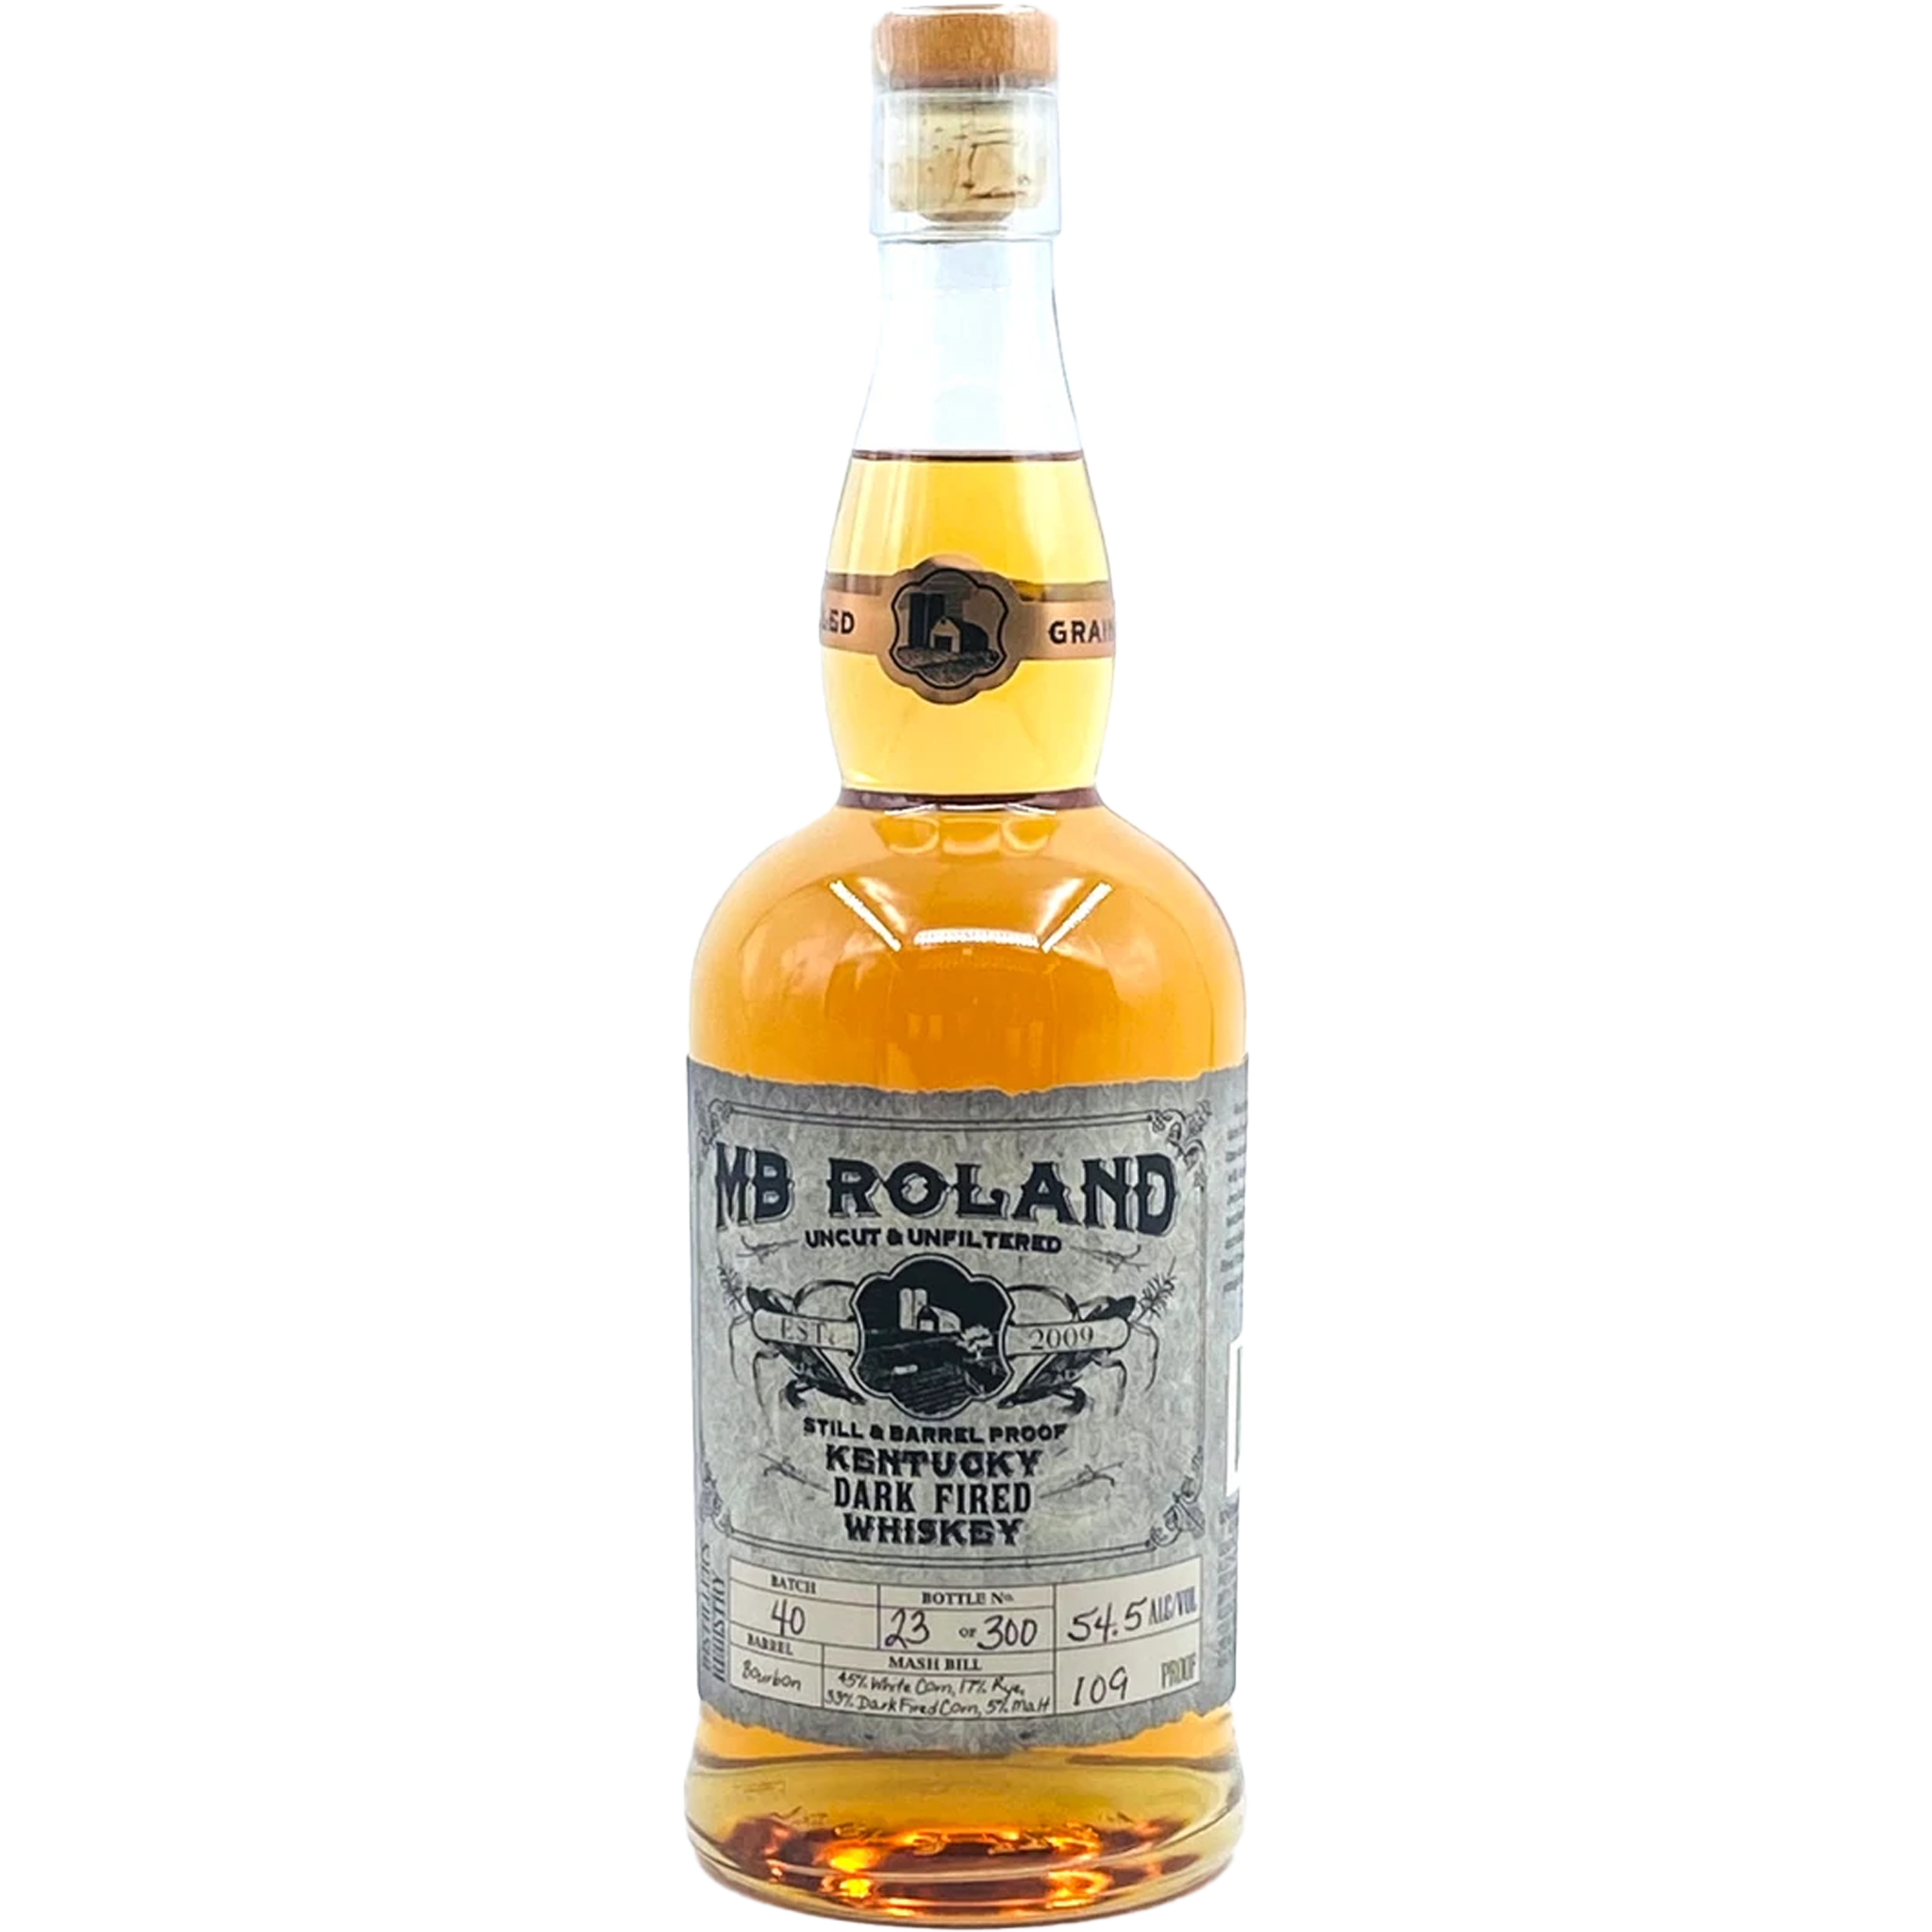 MB Roland Kentucky Dark Fried Whiskey